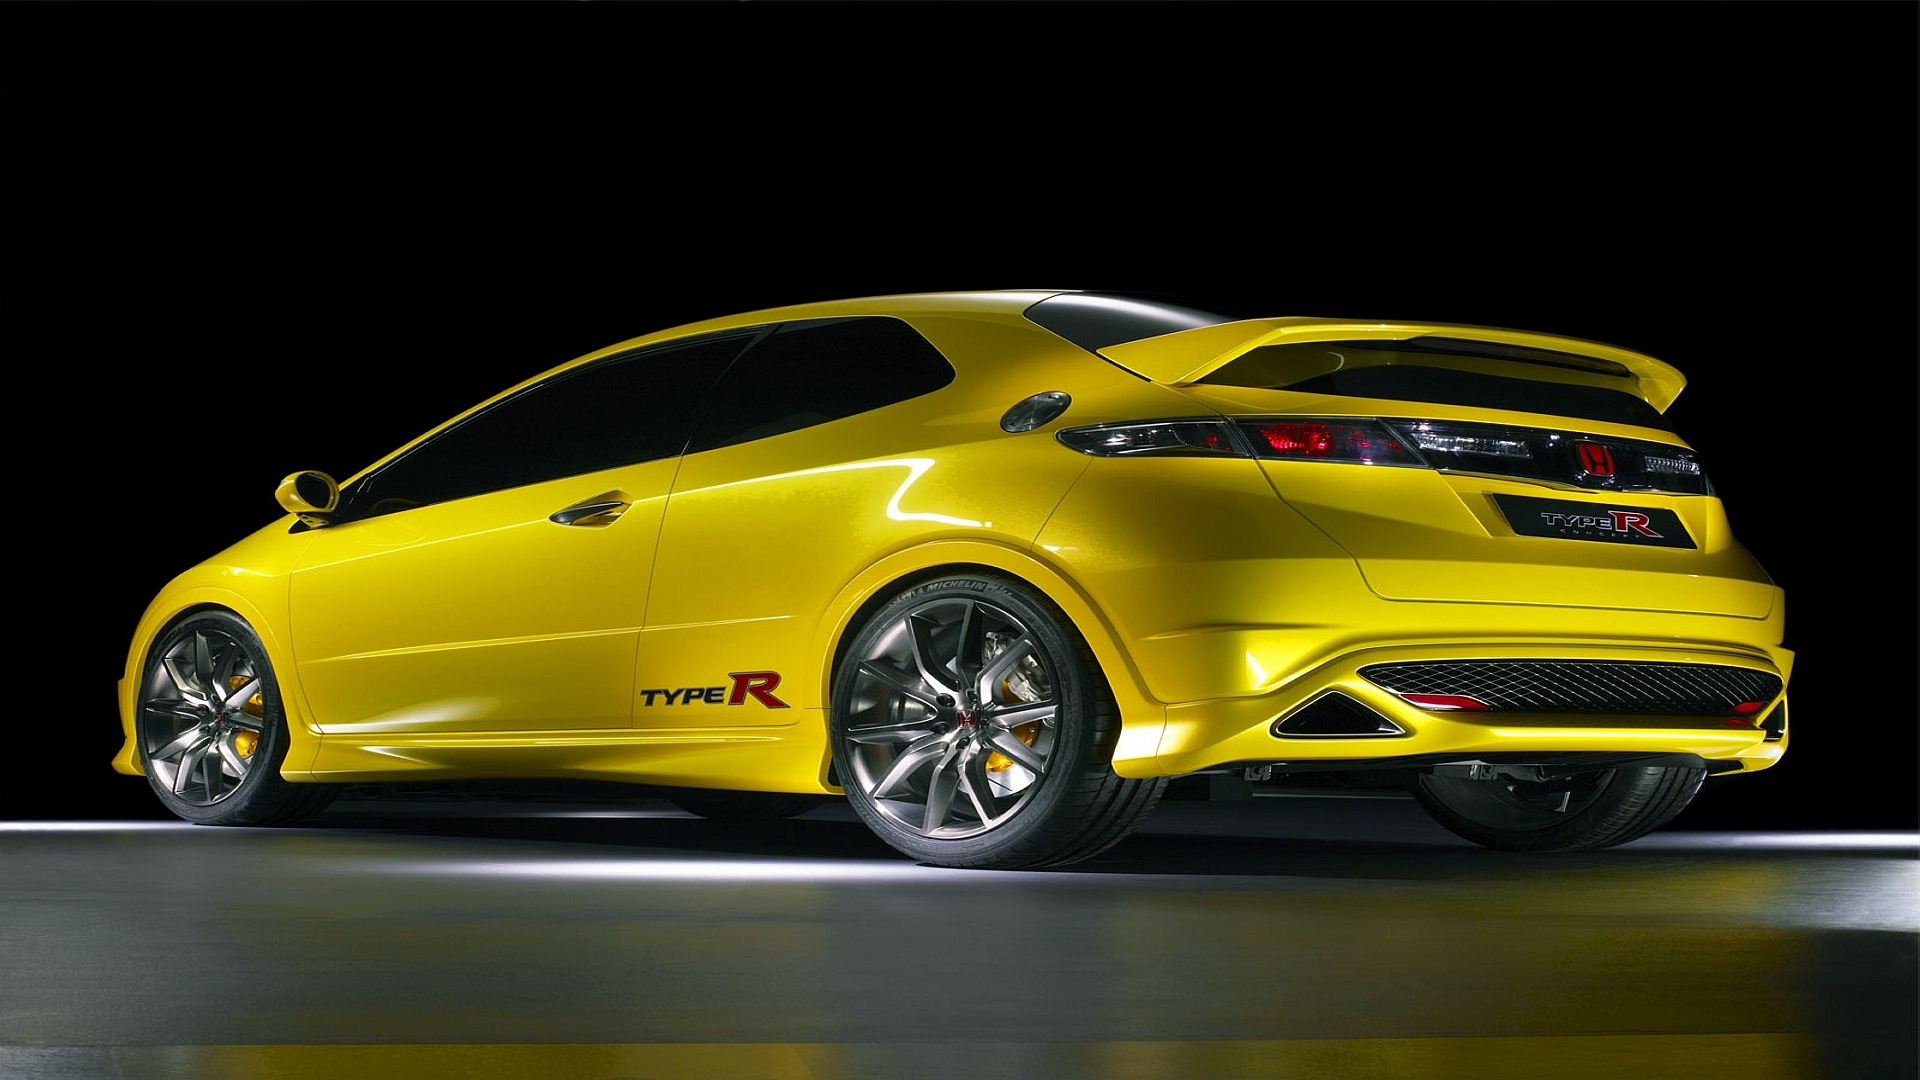 Honda Civic Sports Car Yellow Color Wallpaper HD